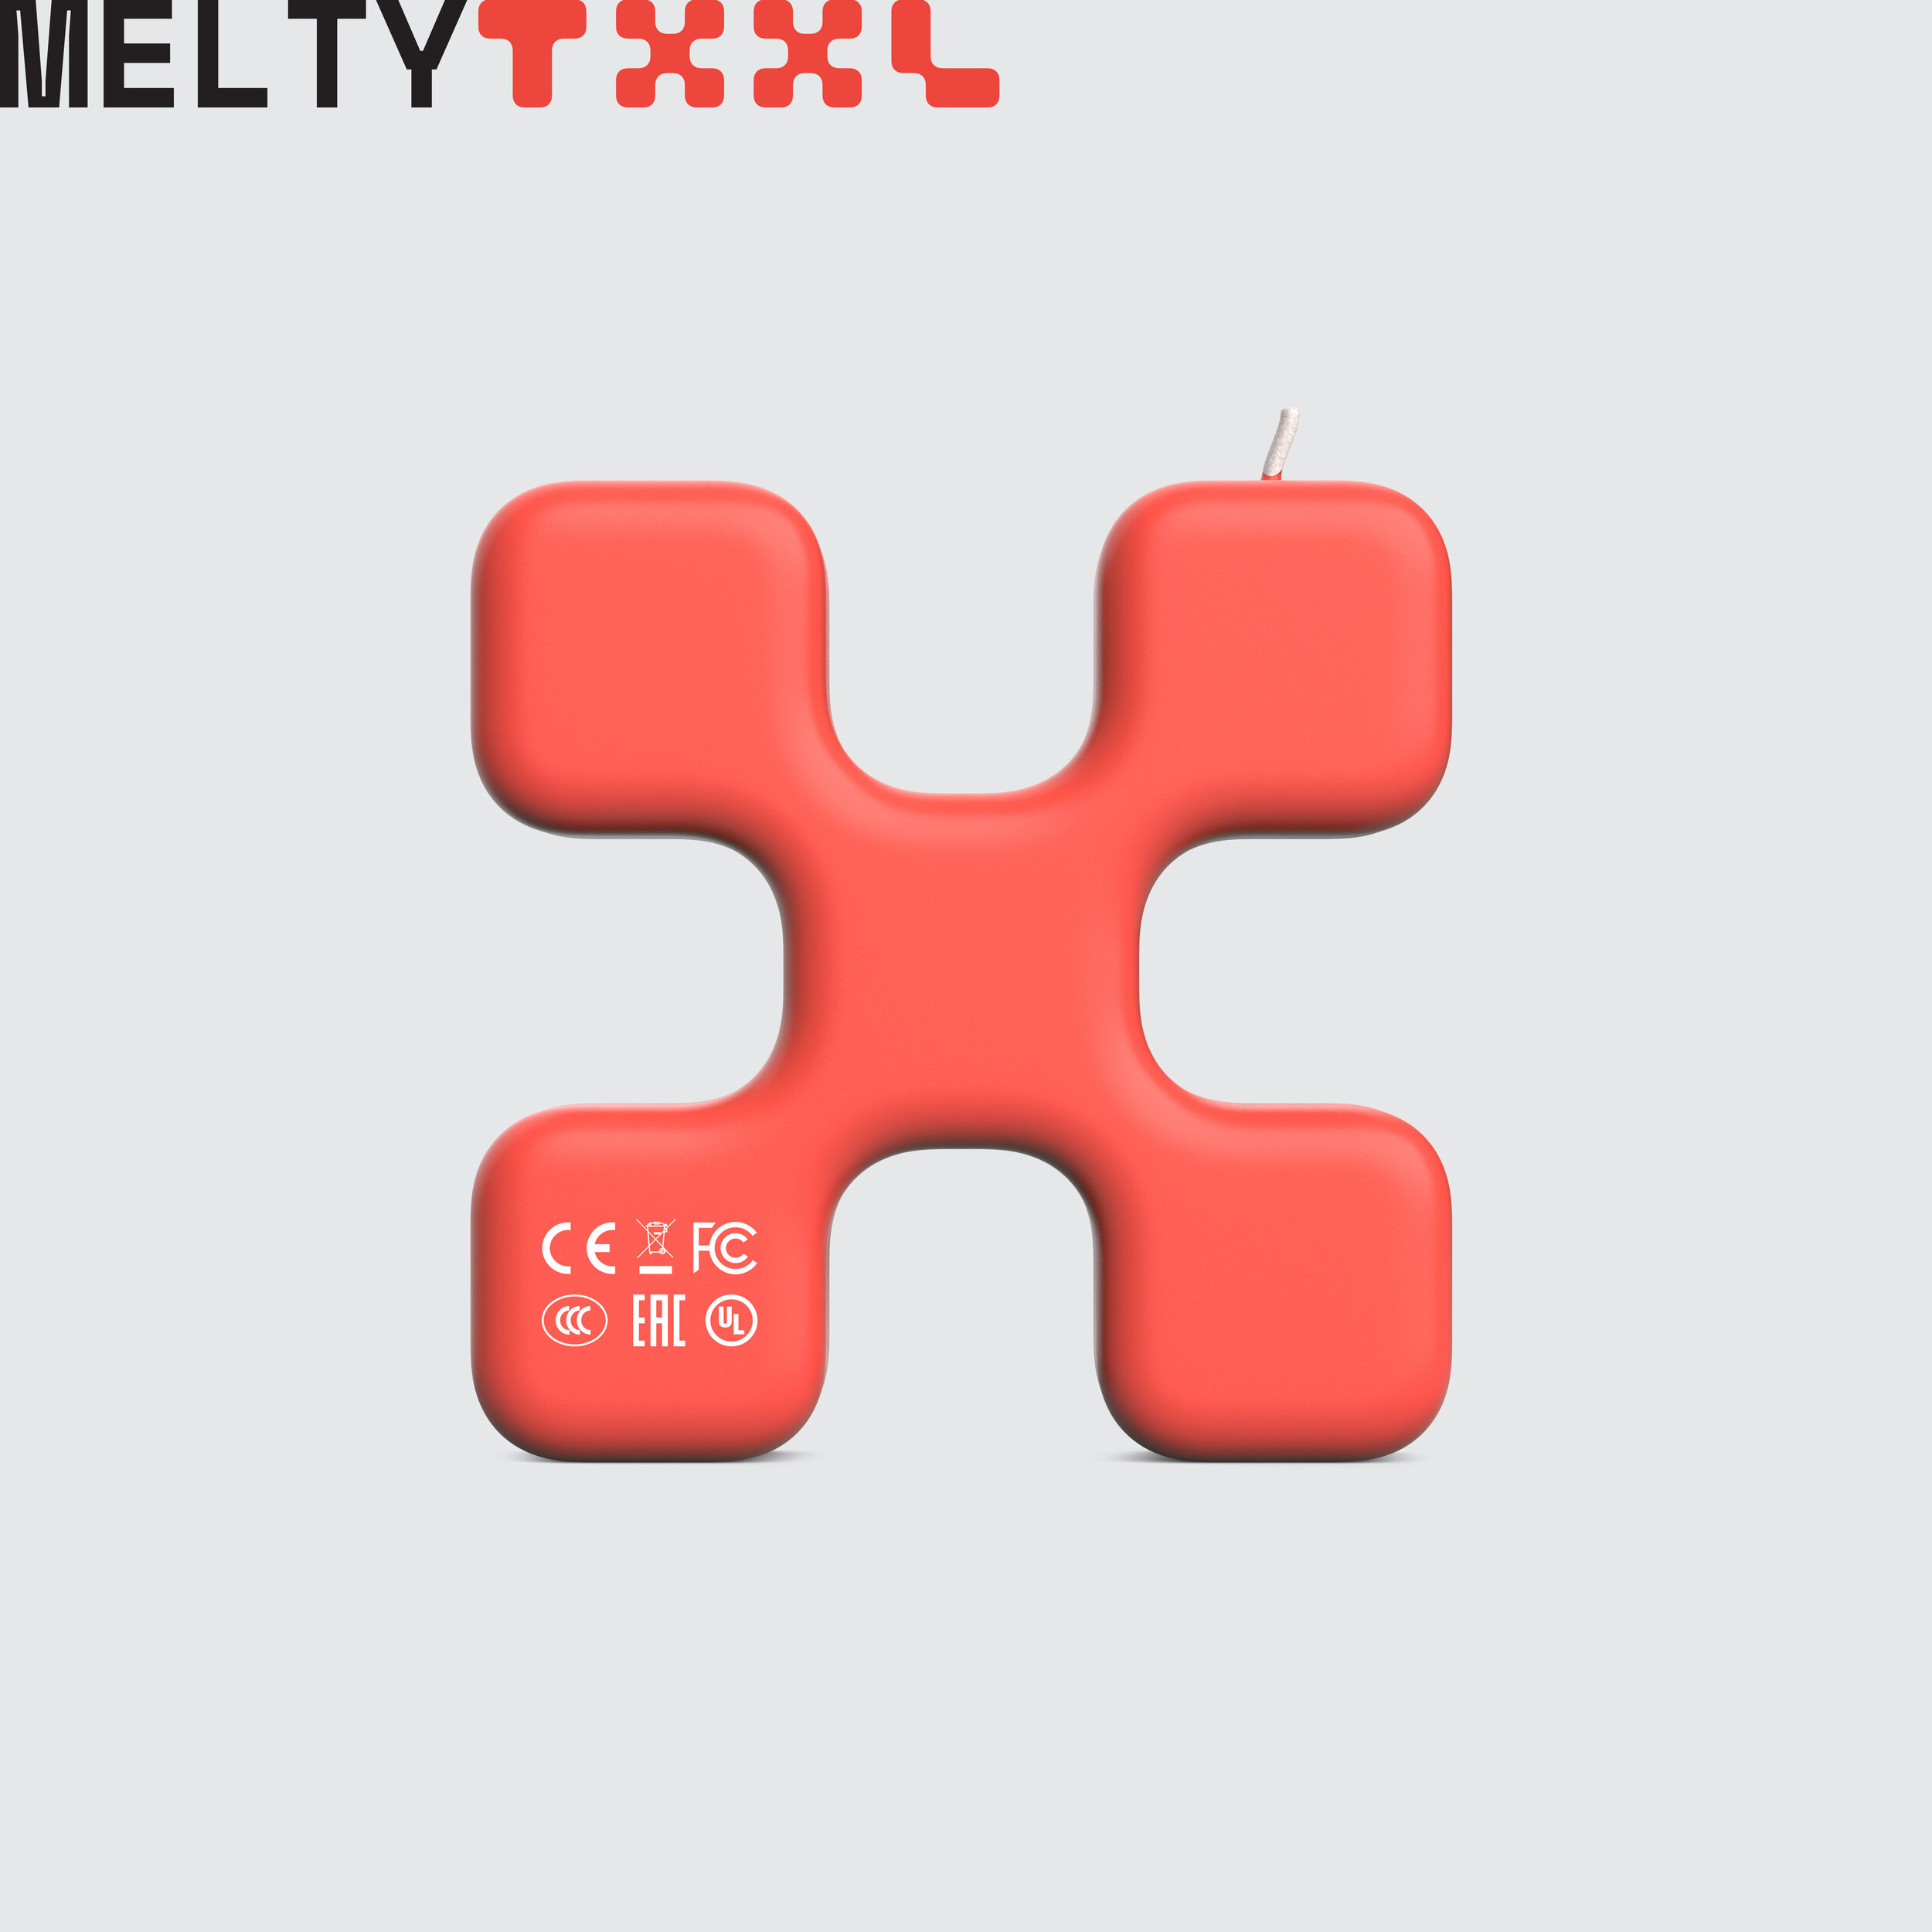 Melty TXXL 1.jpg